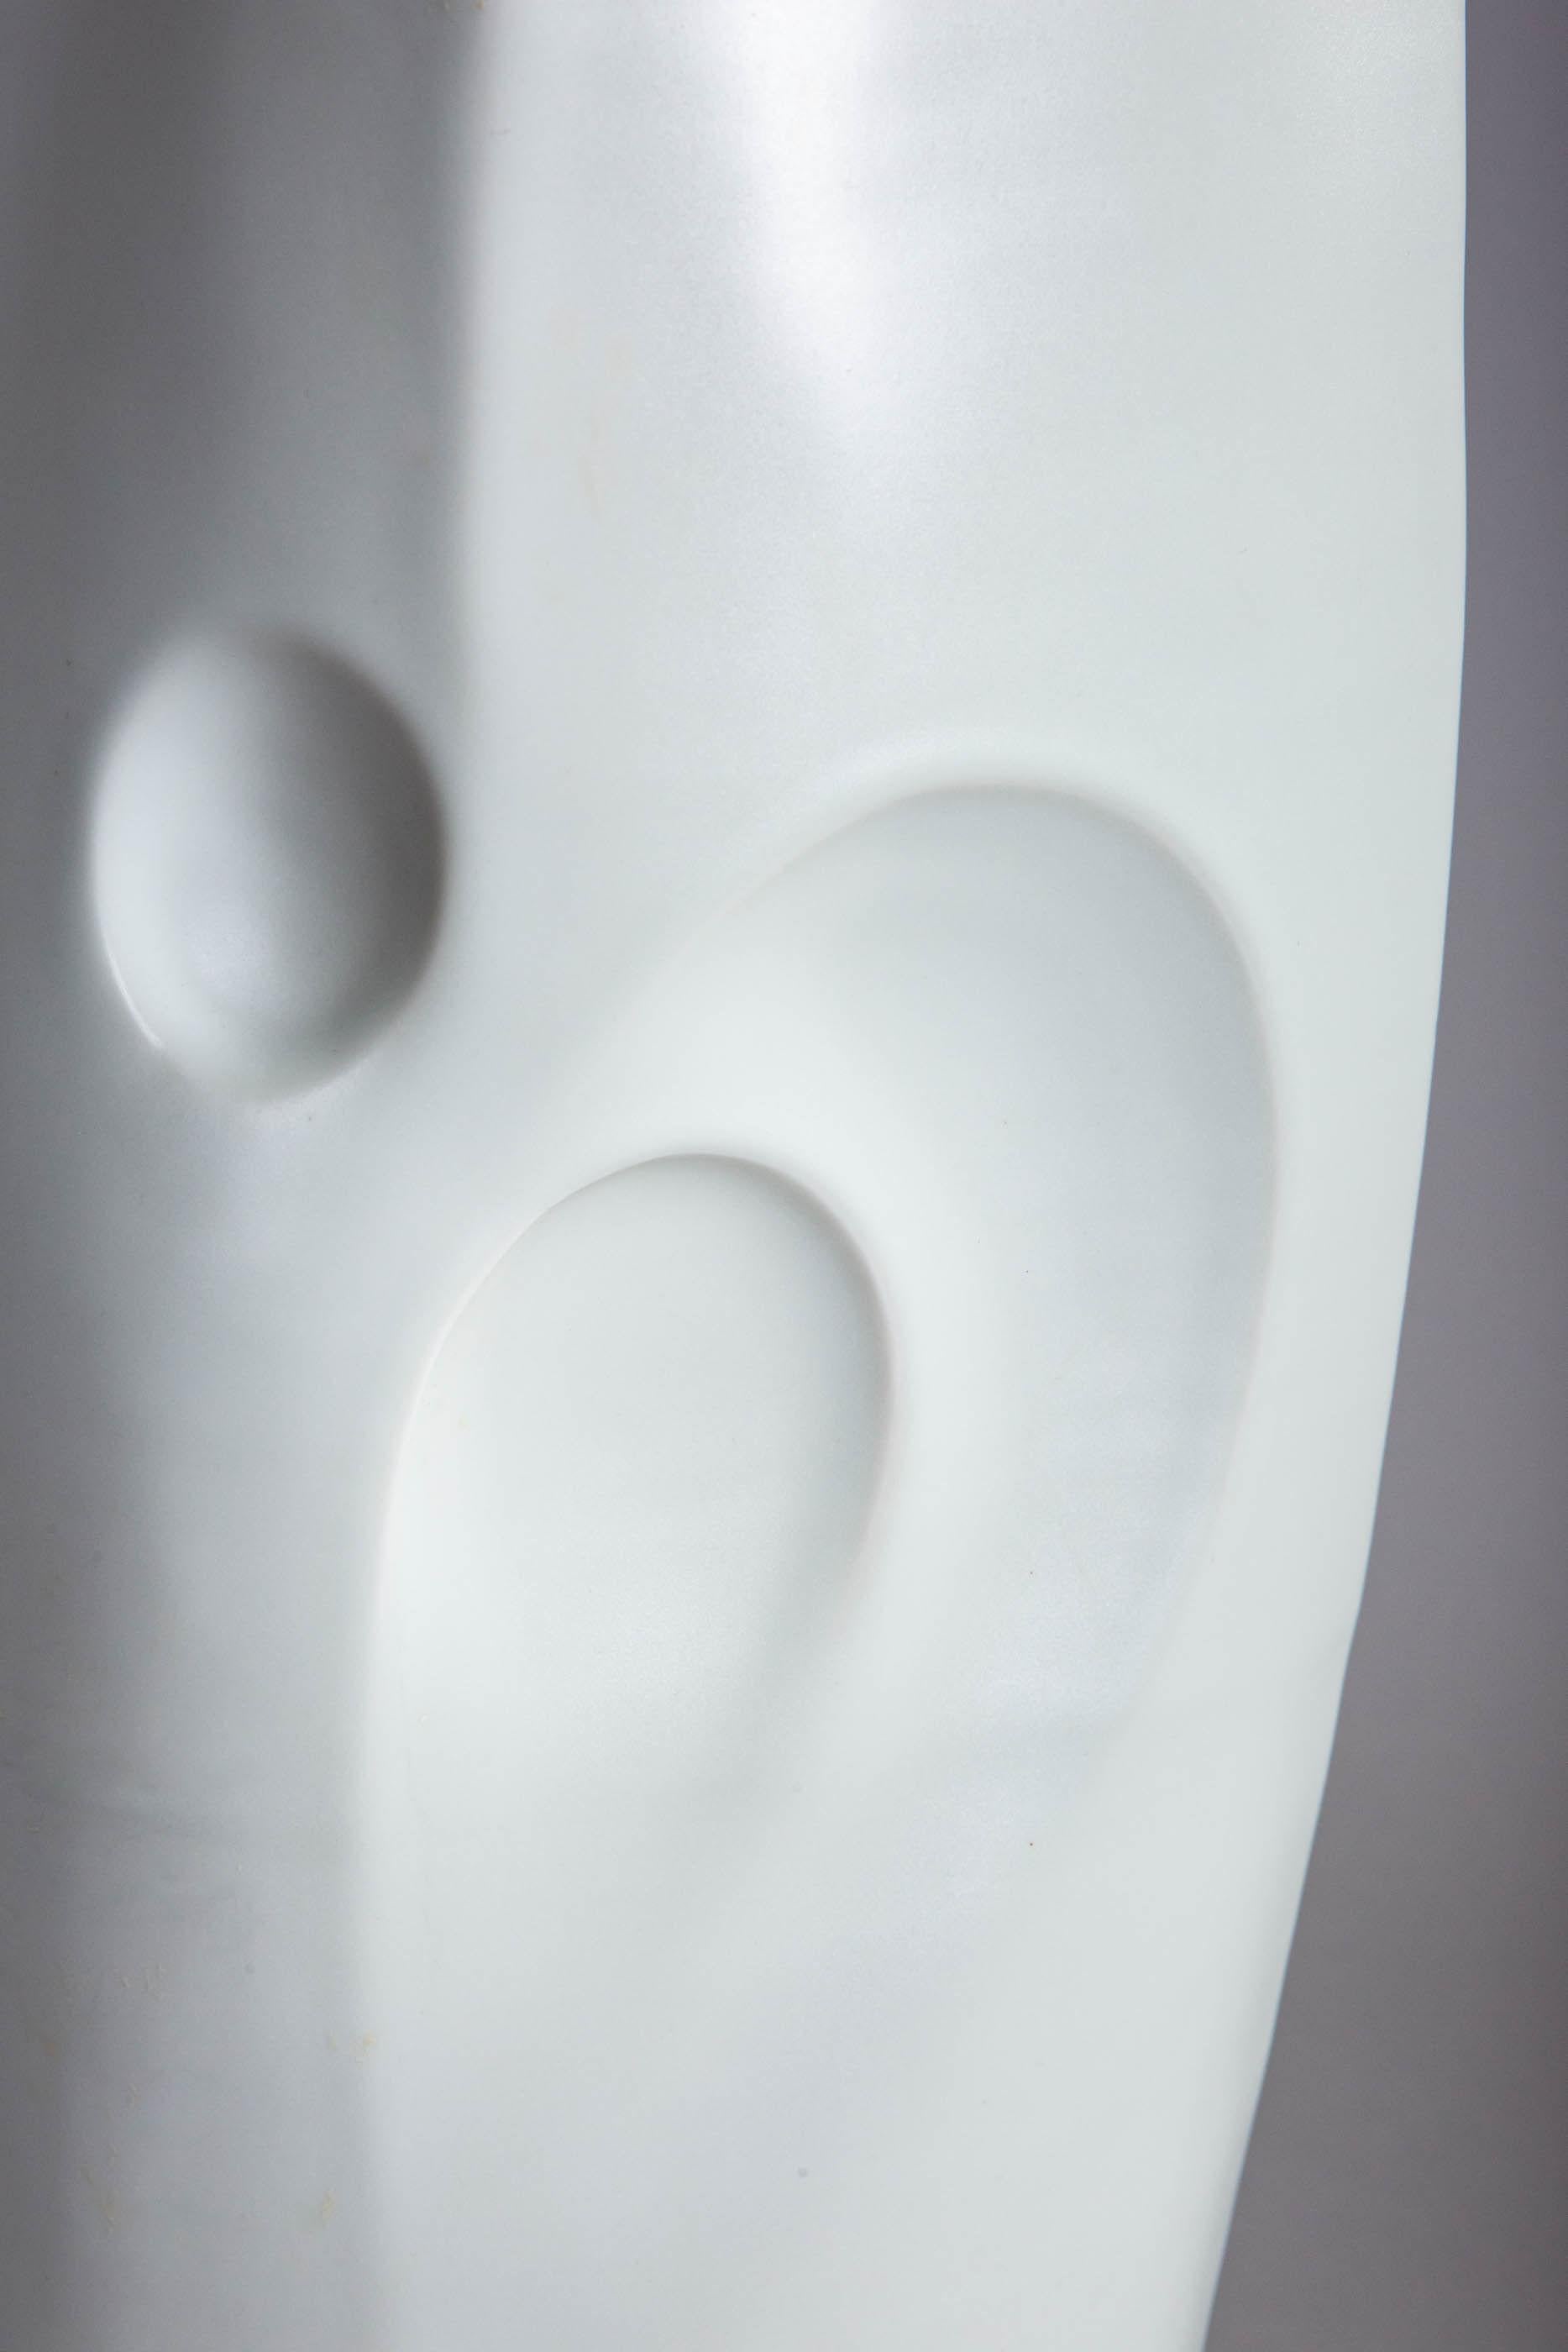 Large Japanese Porcelain Studio Vase In Excellent Condition For Sale In Hudson, NY